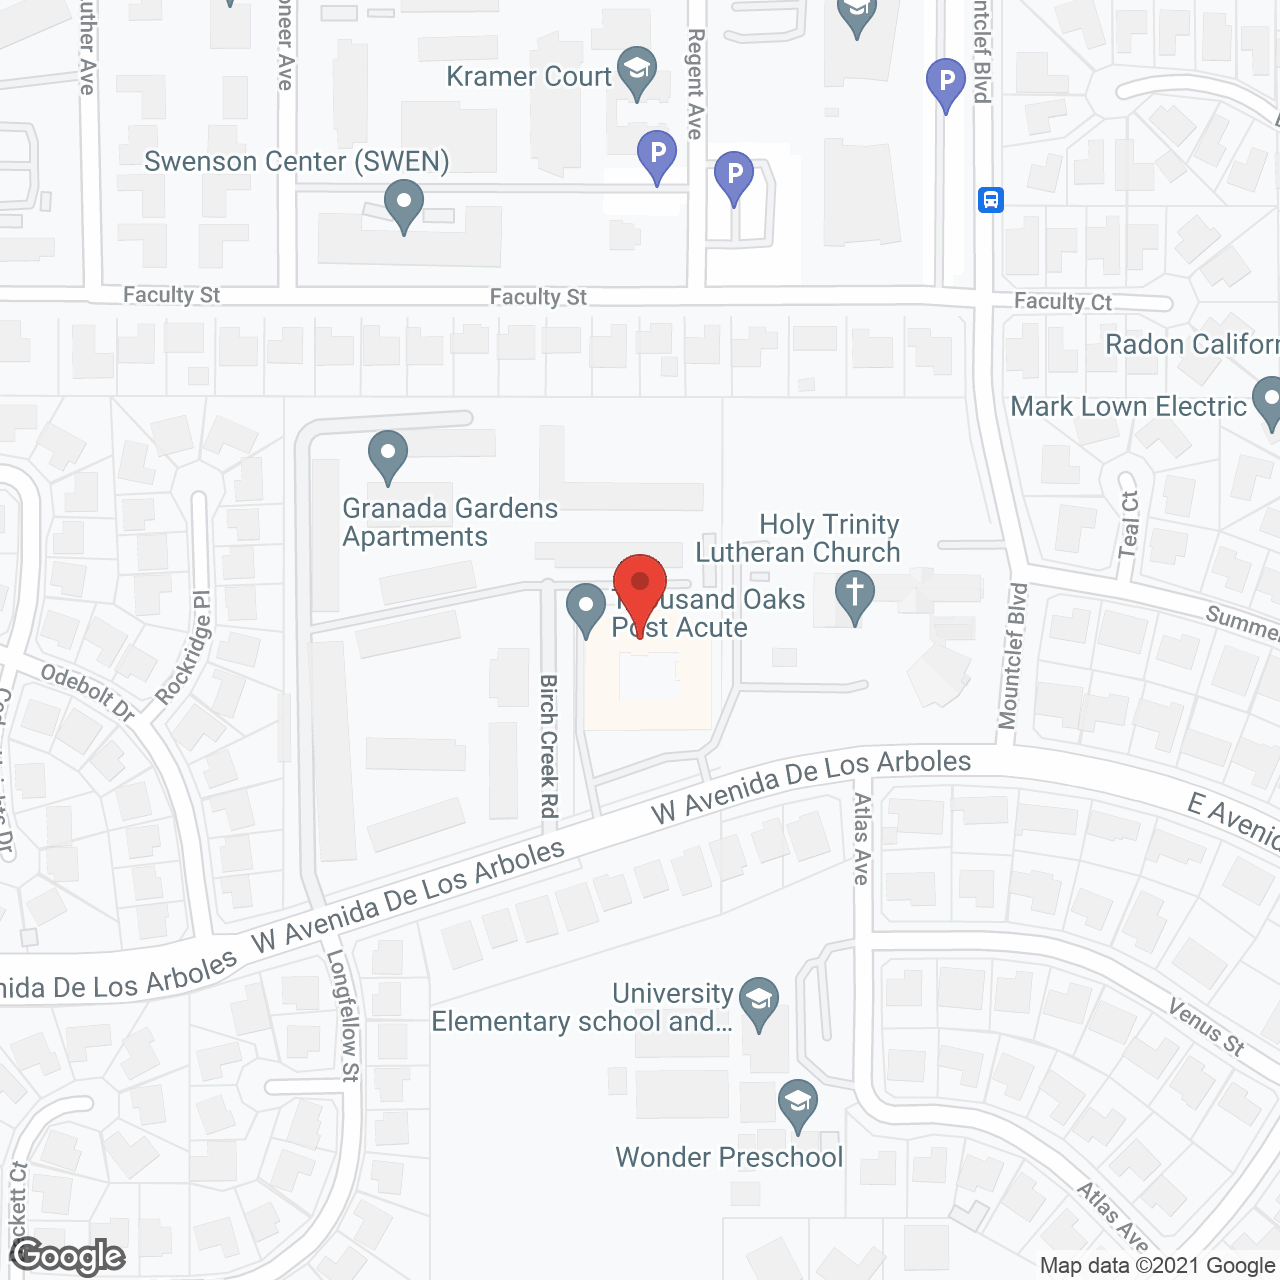 Thousand Oaks Post Acute in google map